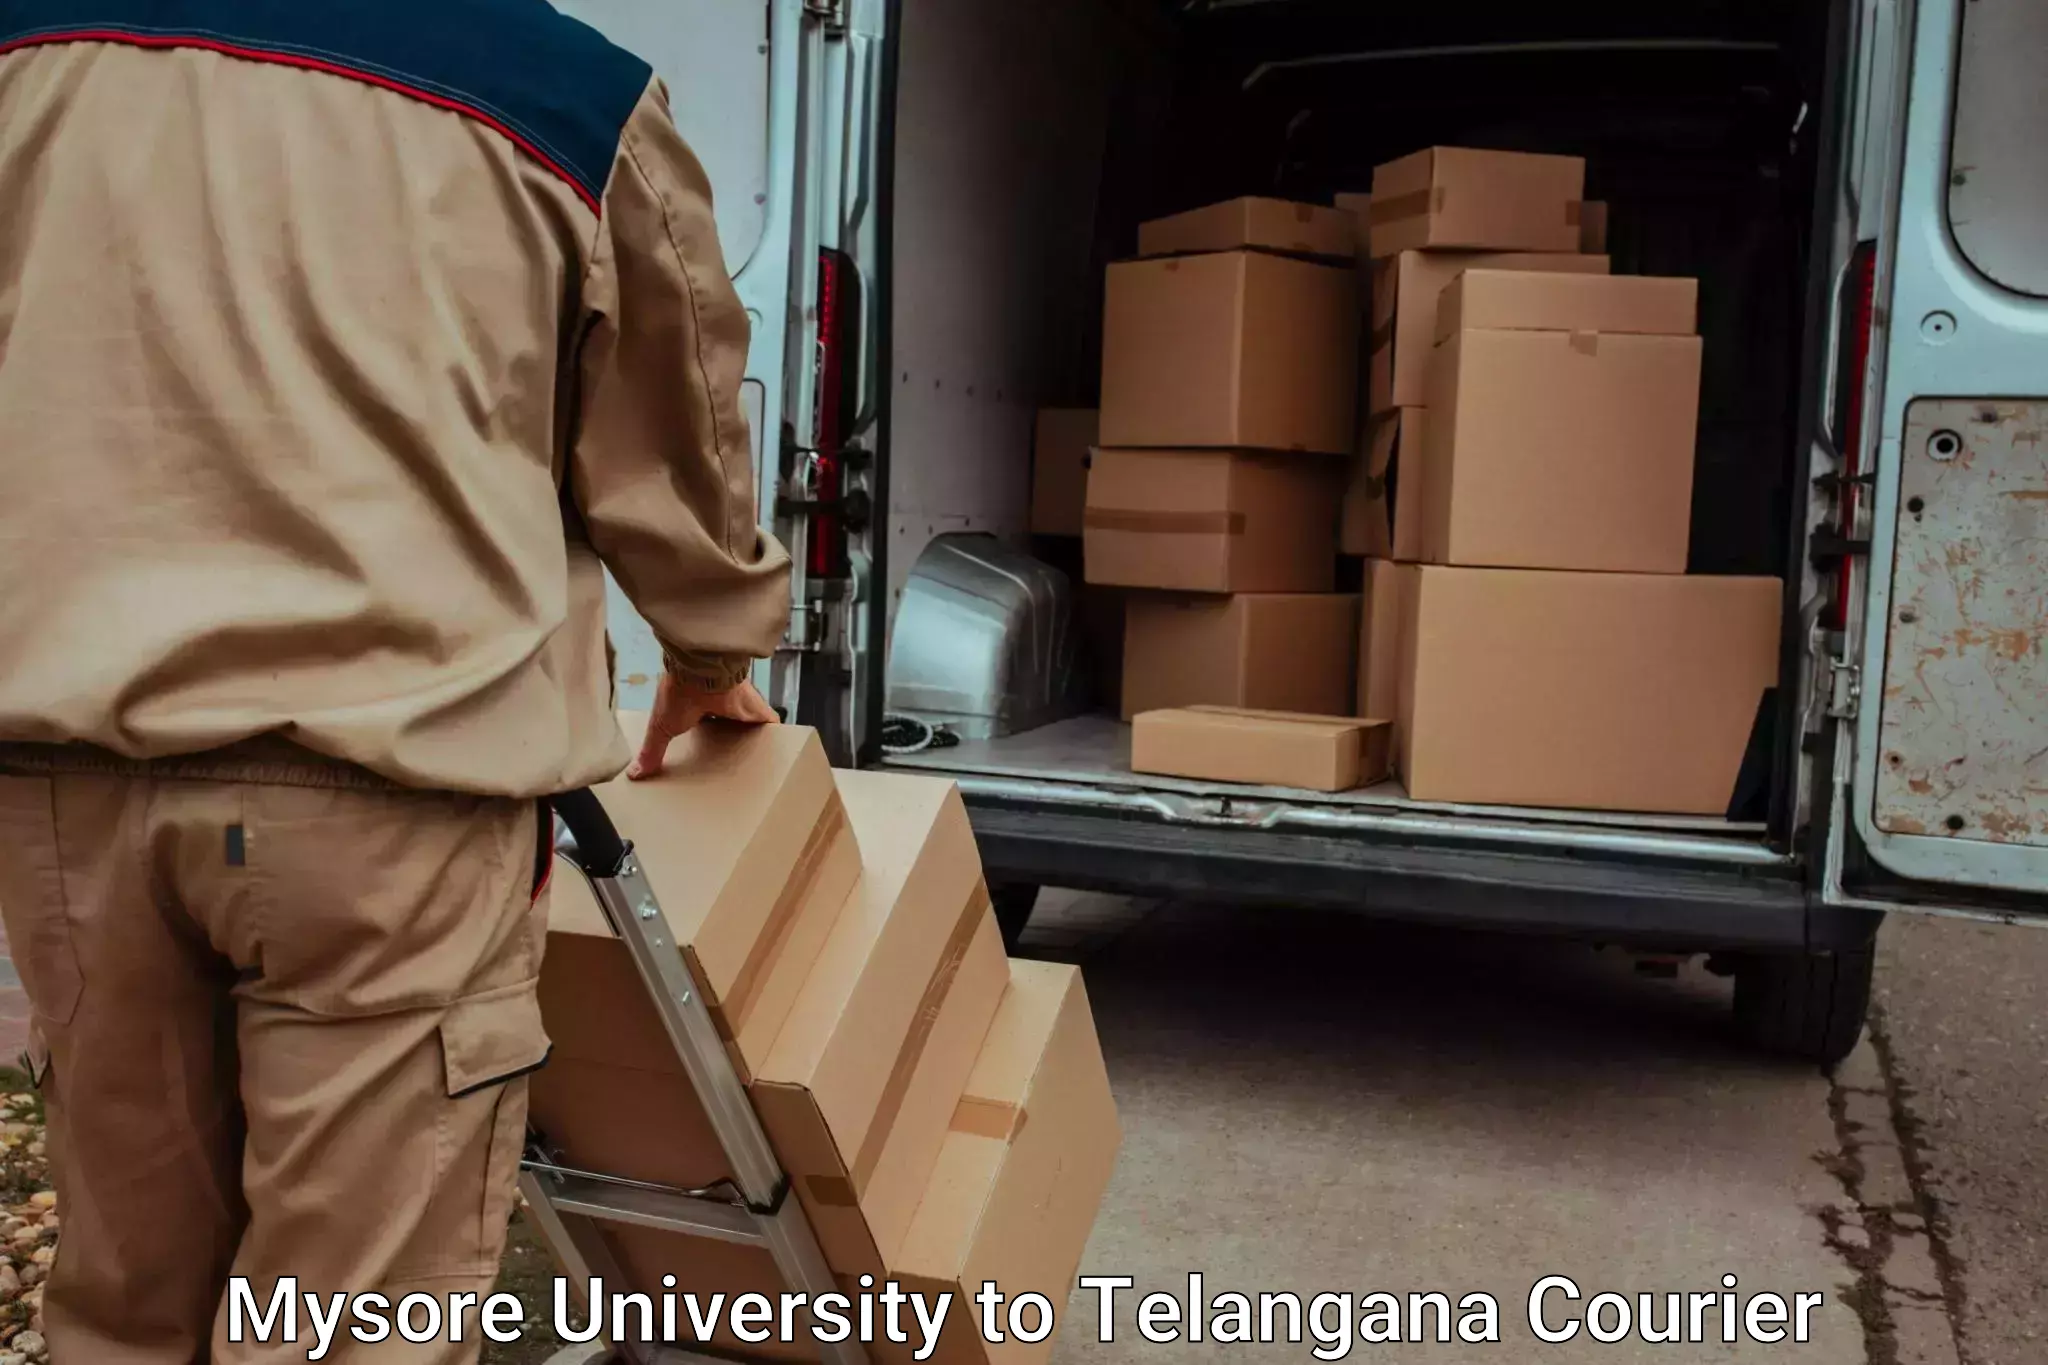 Baggage transport estimate Mysore University to Bejjanki